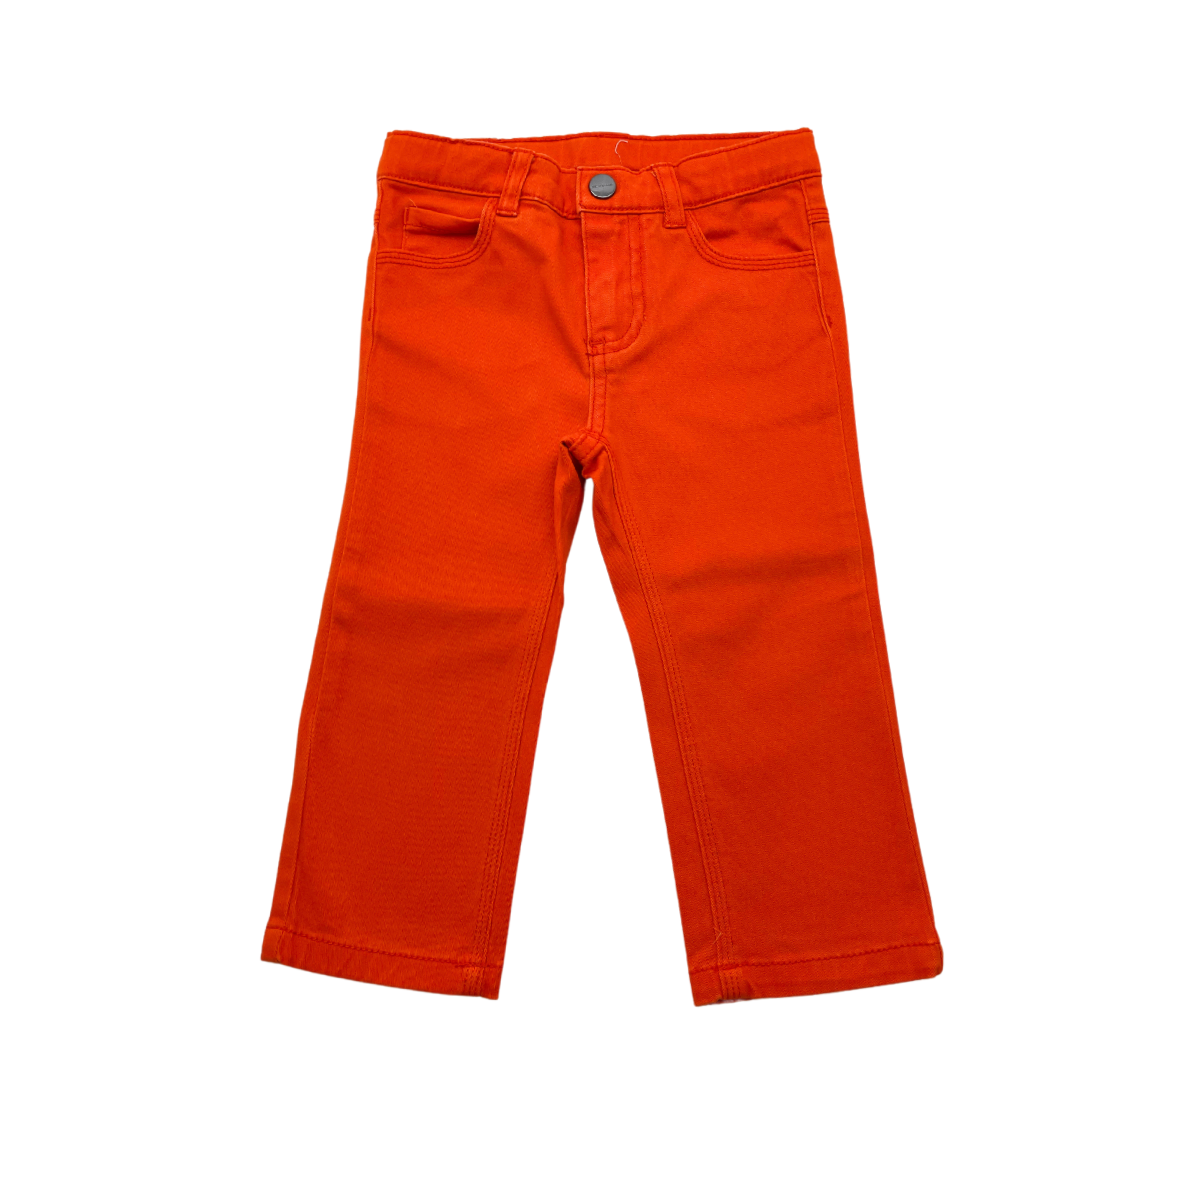 JACADI - Pantalon orange - 18 mois